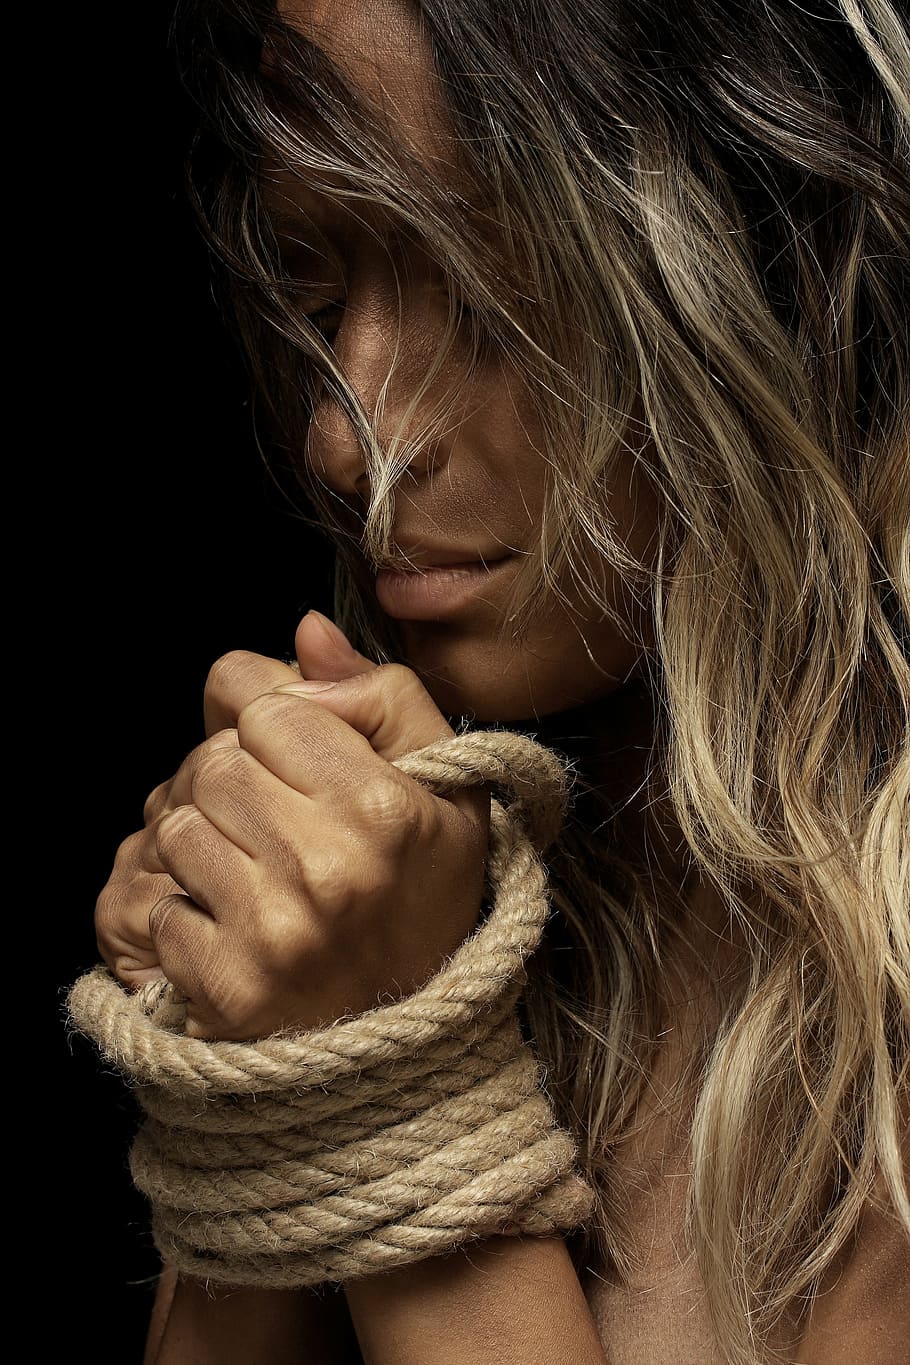 HD wallpaper: woman holding brown rope, model, exposure, hands